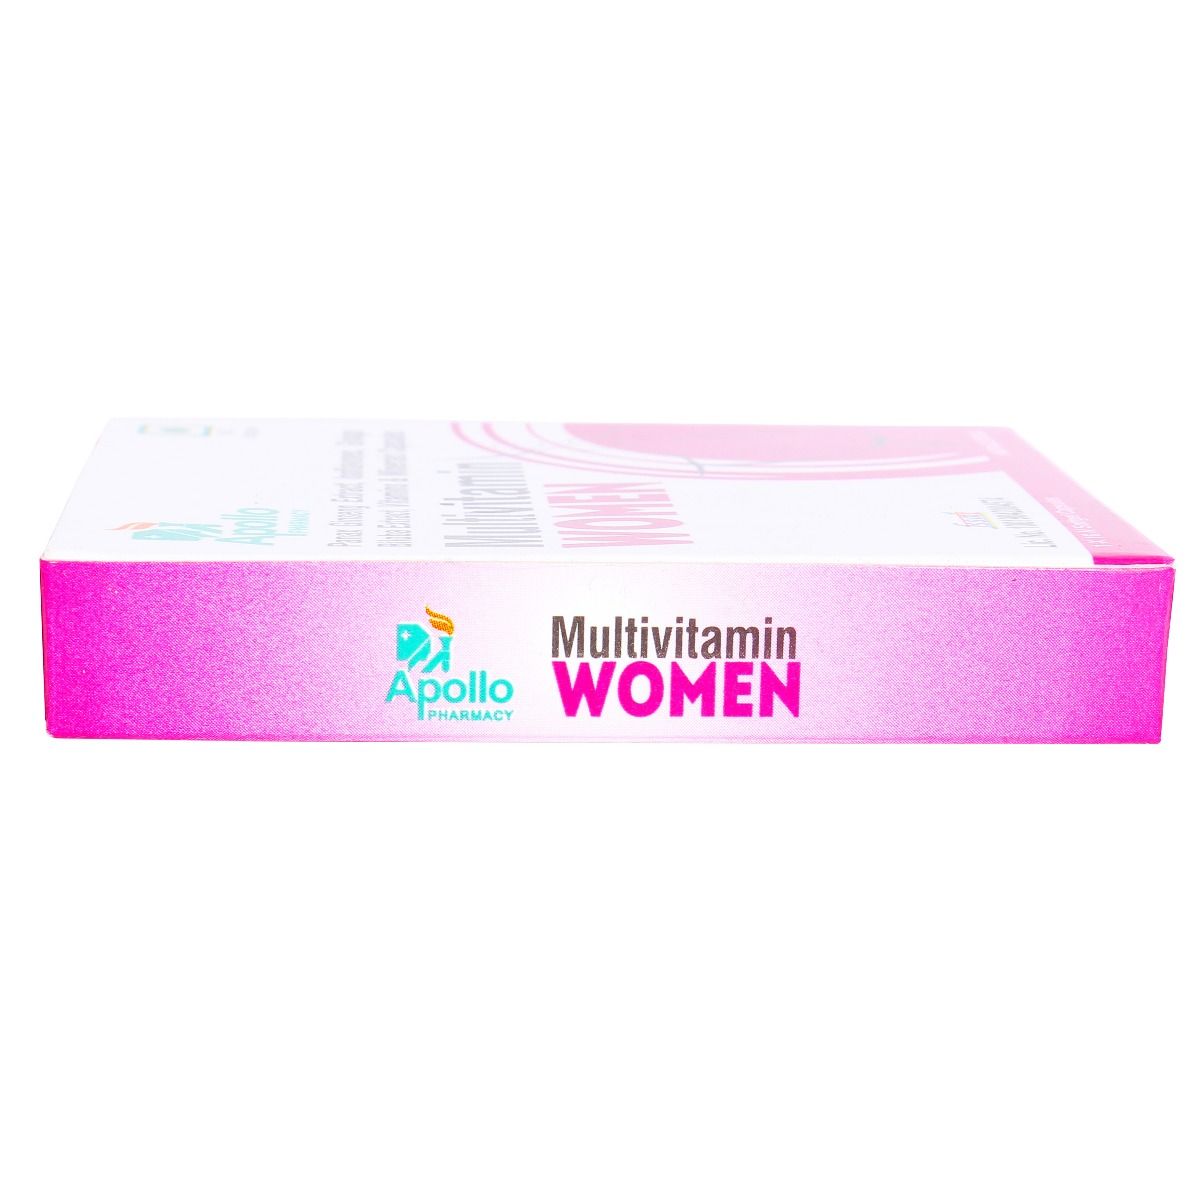 Apollo Pharmacy Multivitamin for Women, 10 Capsules, Pack of 10 S